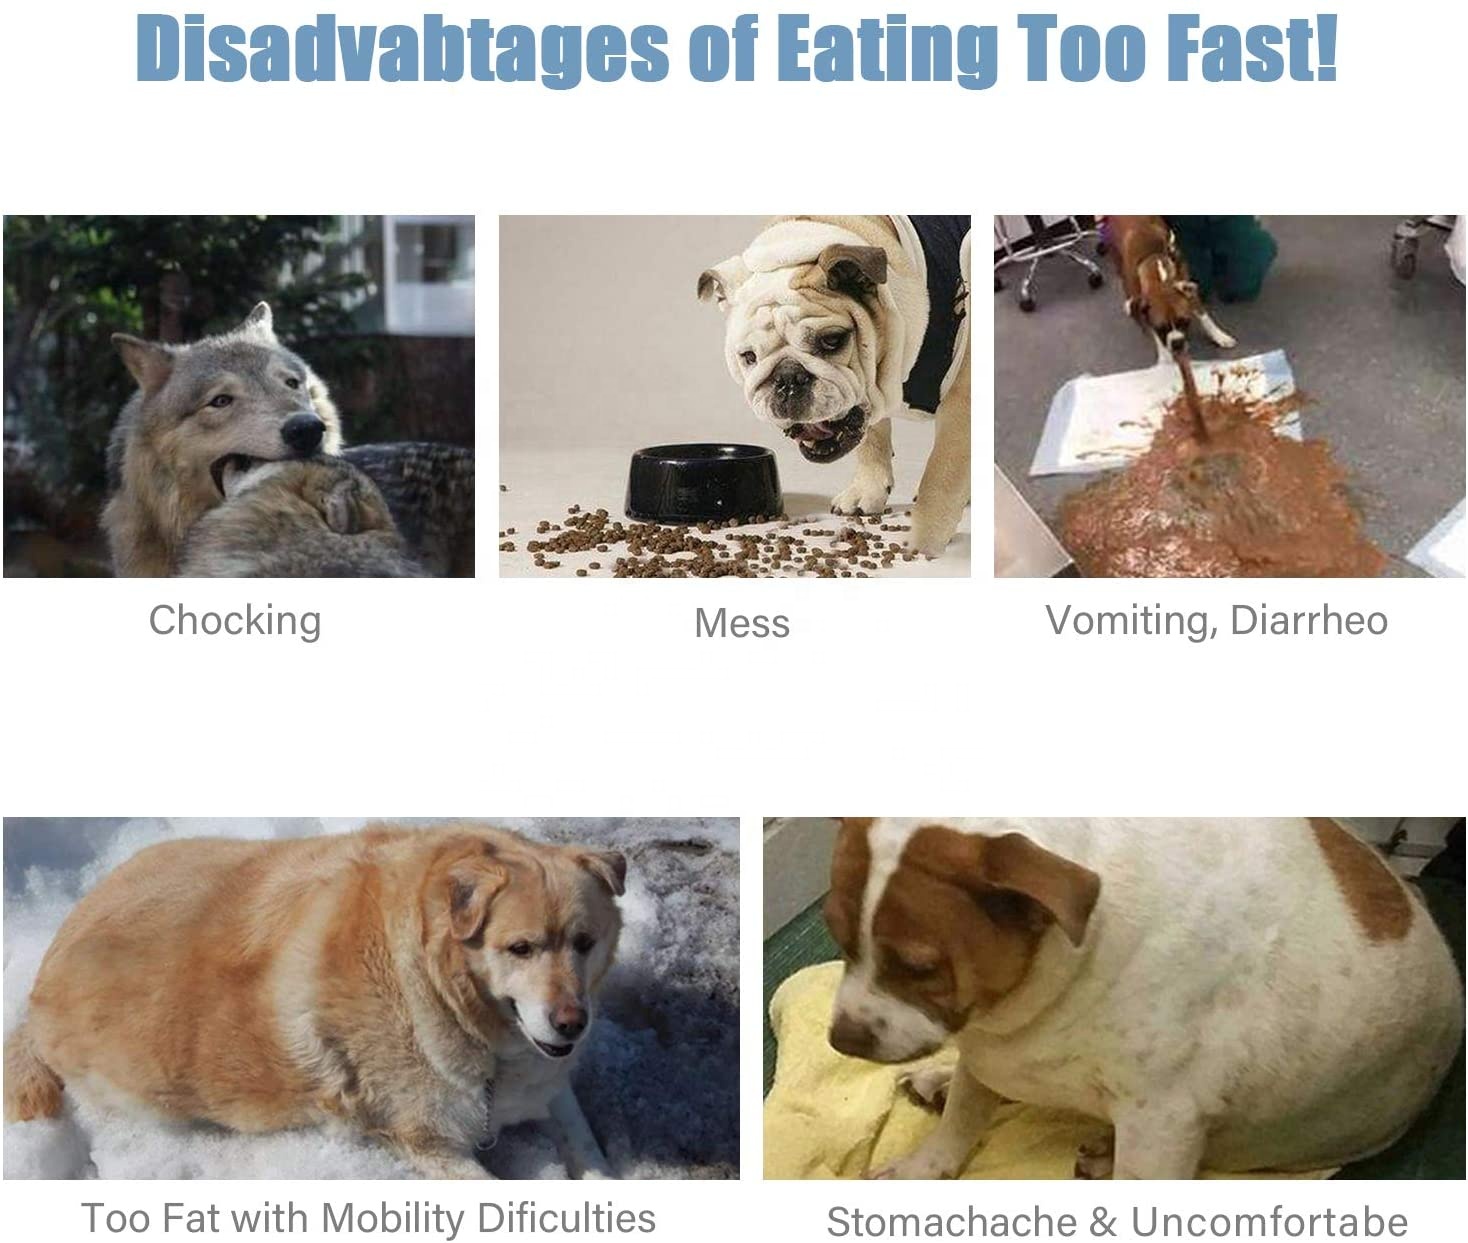 Slow Feeder Bowl AntiChoke Pet Bowls Healthy Food Fun Pets Water Bowl Dog Puppy